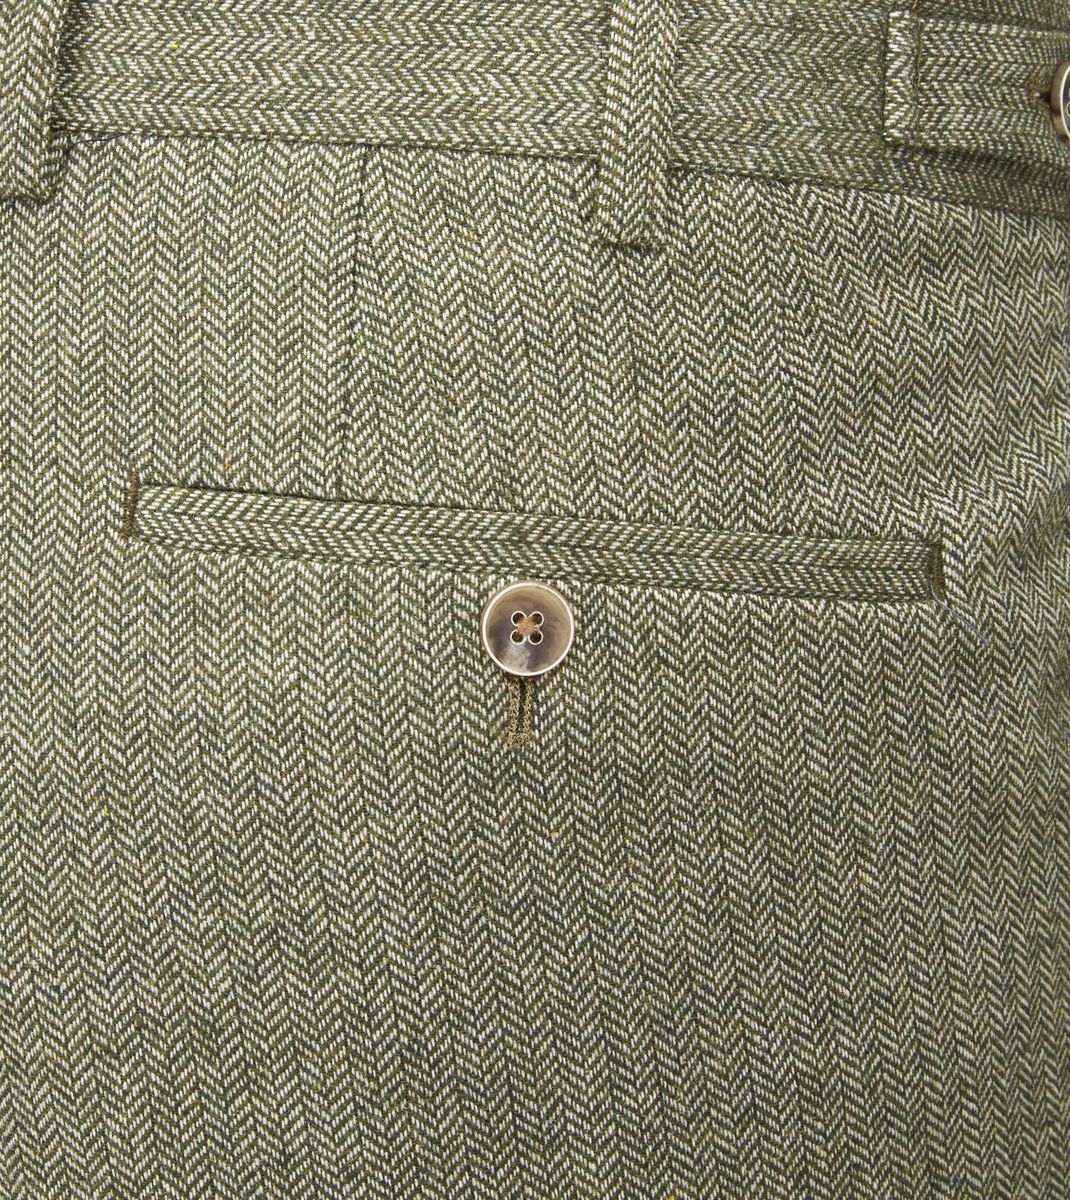 Jude Tweed Suit Trousers - Sage Green